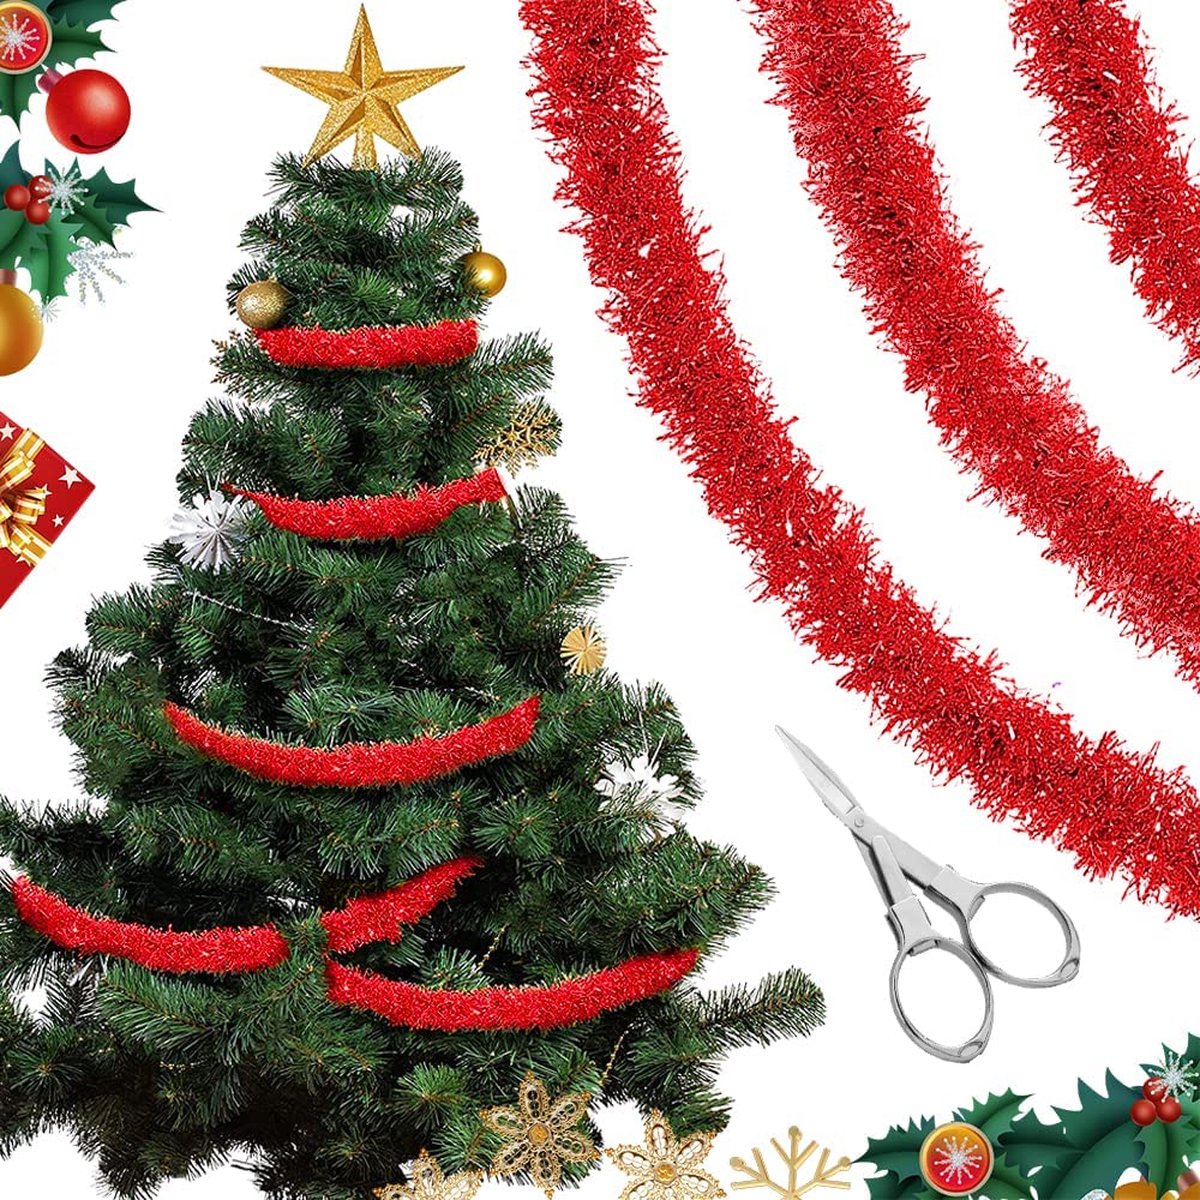 20 meter kerstboom lametta slinger, rode kerstboom, lametta-slinger, lametta, rode kerstboom, kerstboomversiering, lametta, lametta kerstboom